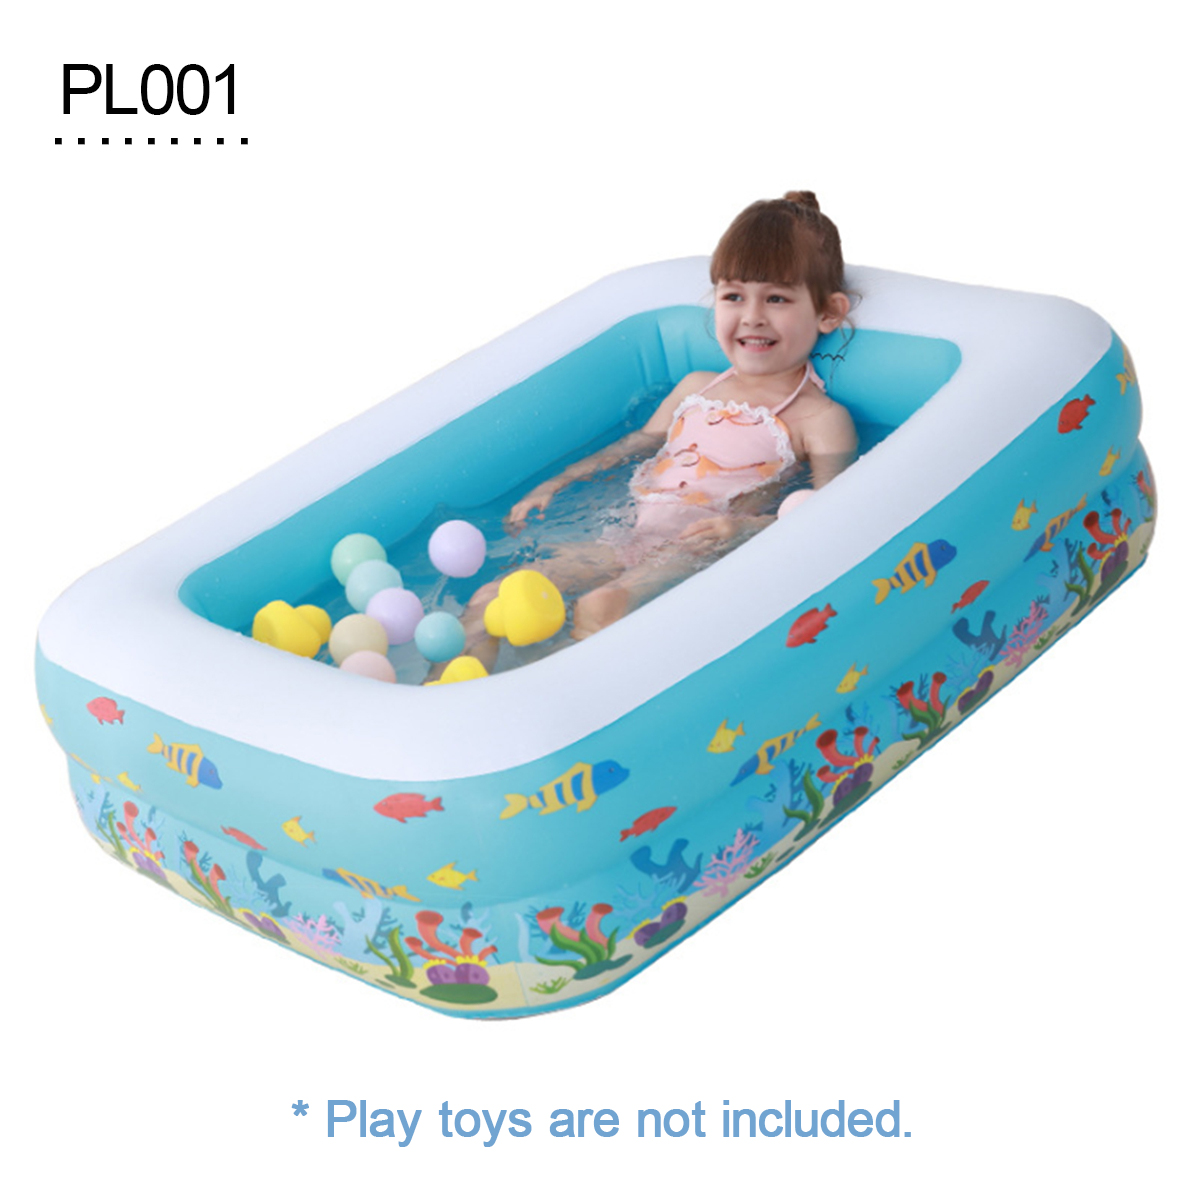 453x338x138-Inflatable-Swimming-Pool-Family-Play-Center-Swim-Baby-Kids-Child-Backyard-Garden-1551978-7